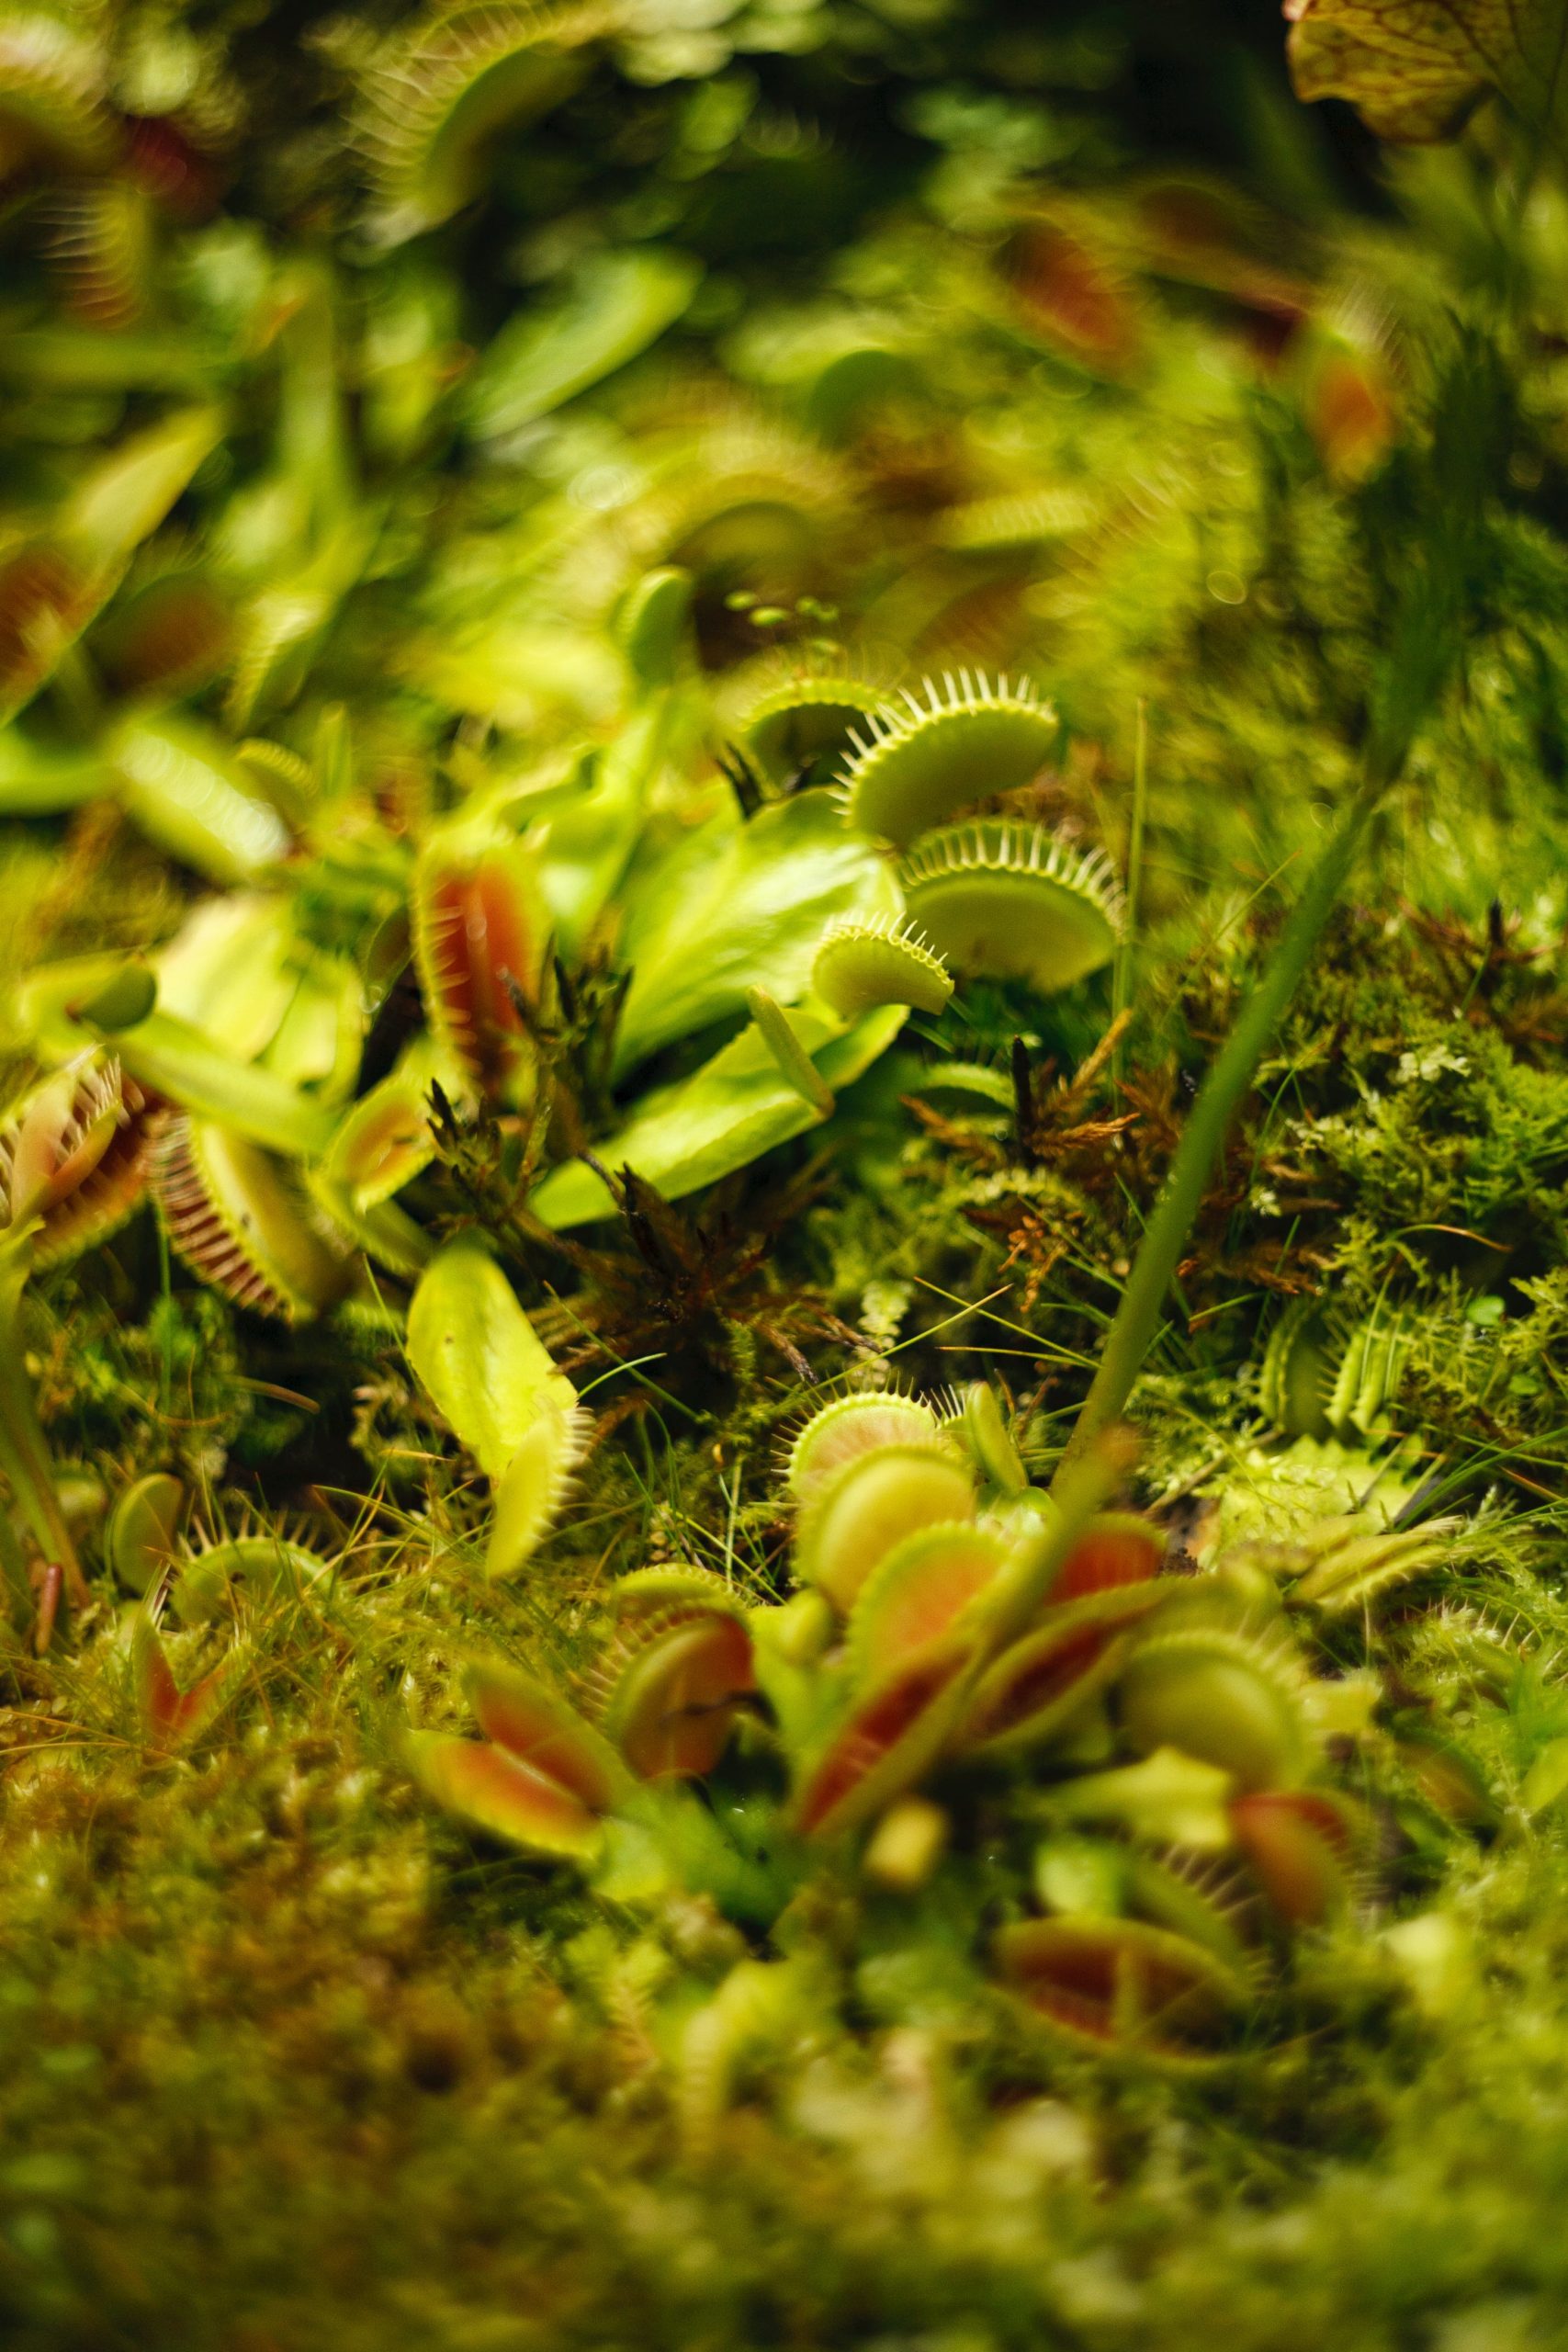 Photograph of Venus flytrap plants by Elizaveta Mitenkova